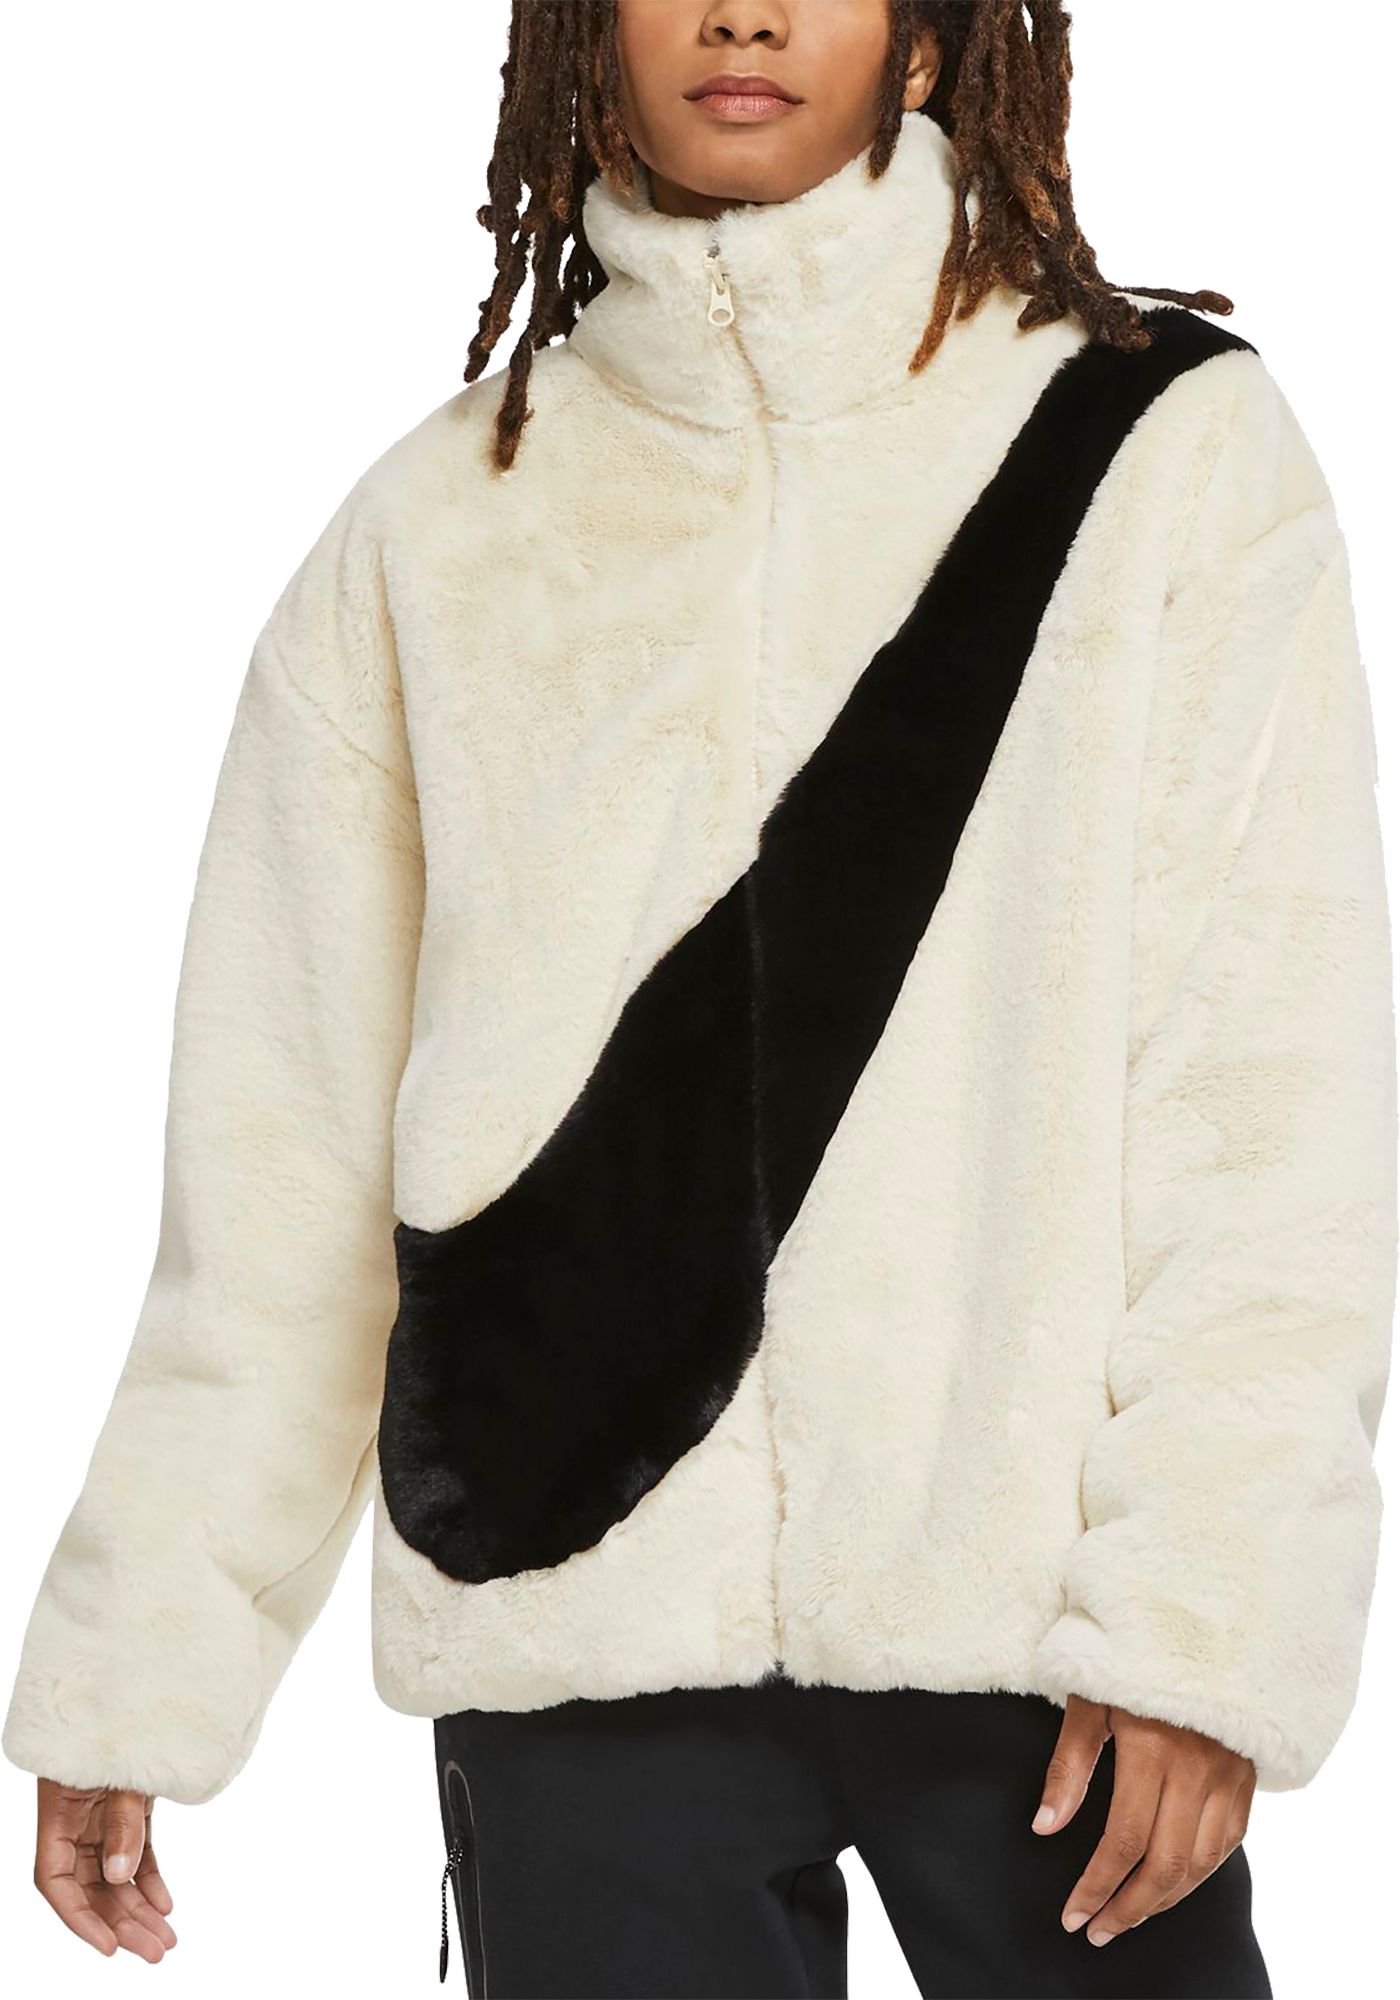 nike jacket with fur